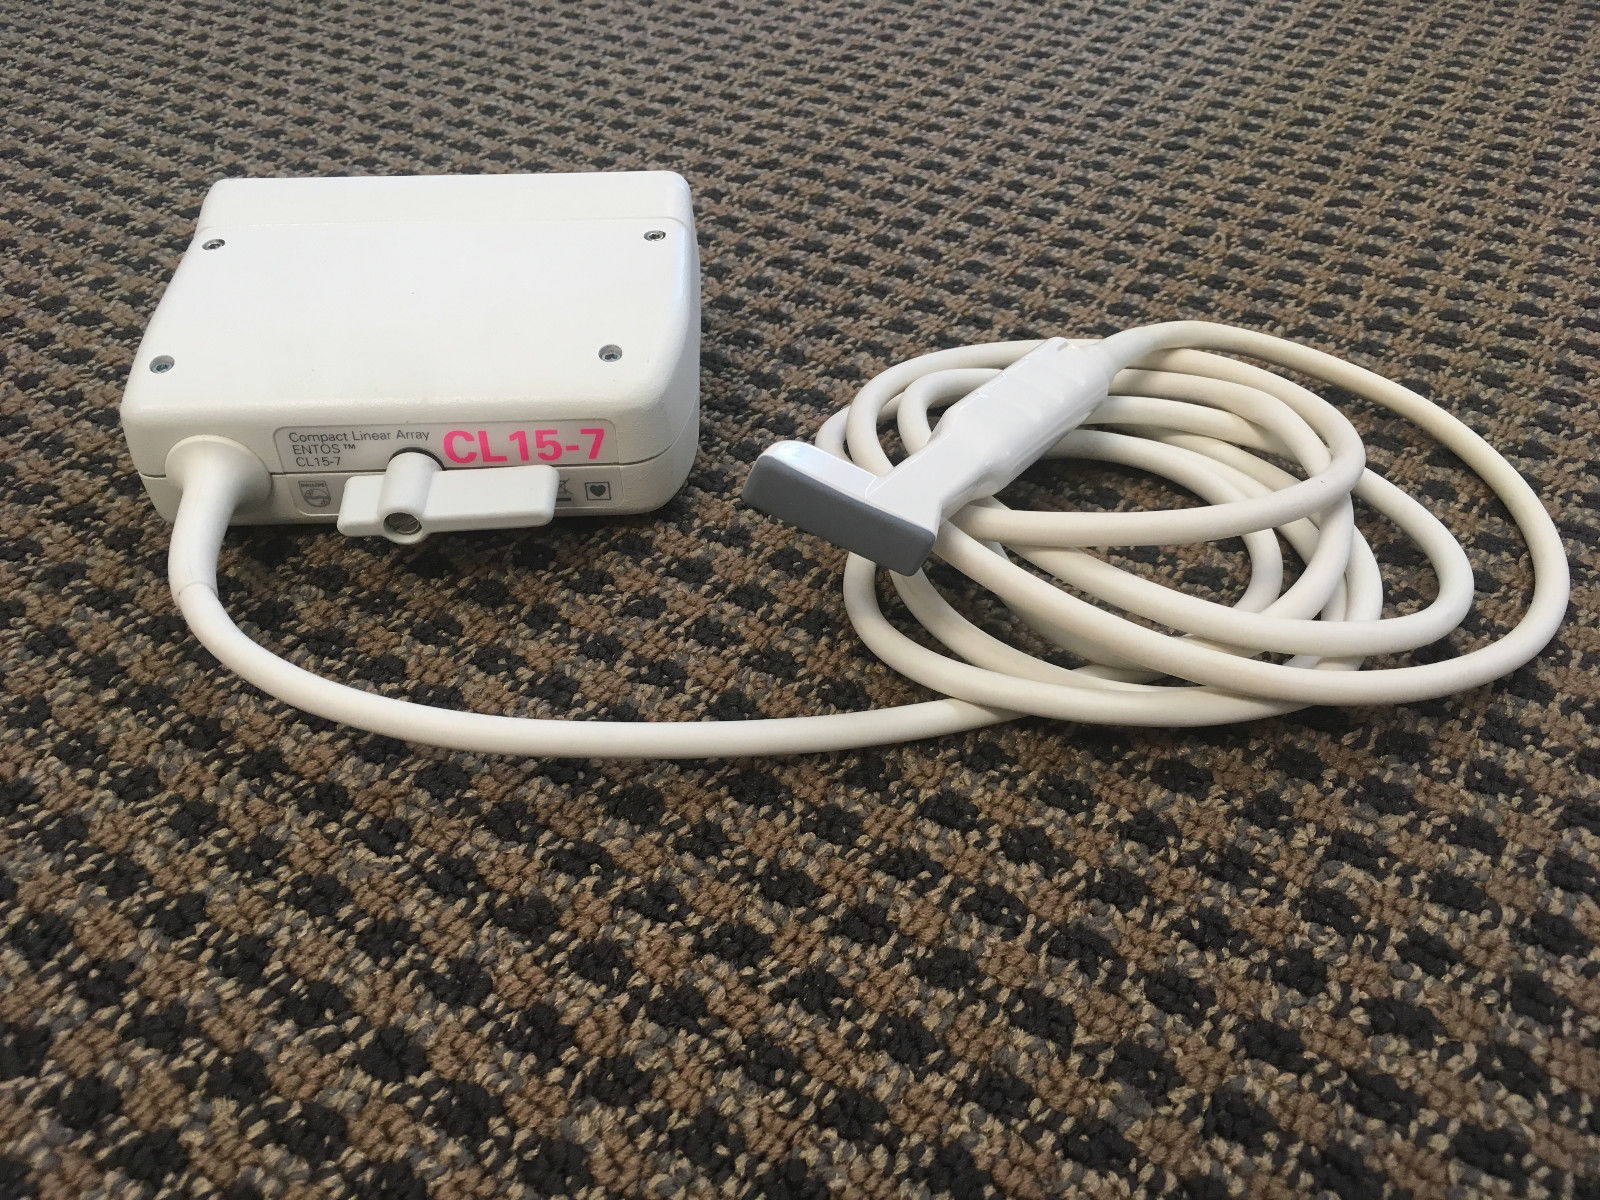 a white box probe sitting on top of a carpet next to a white cord